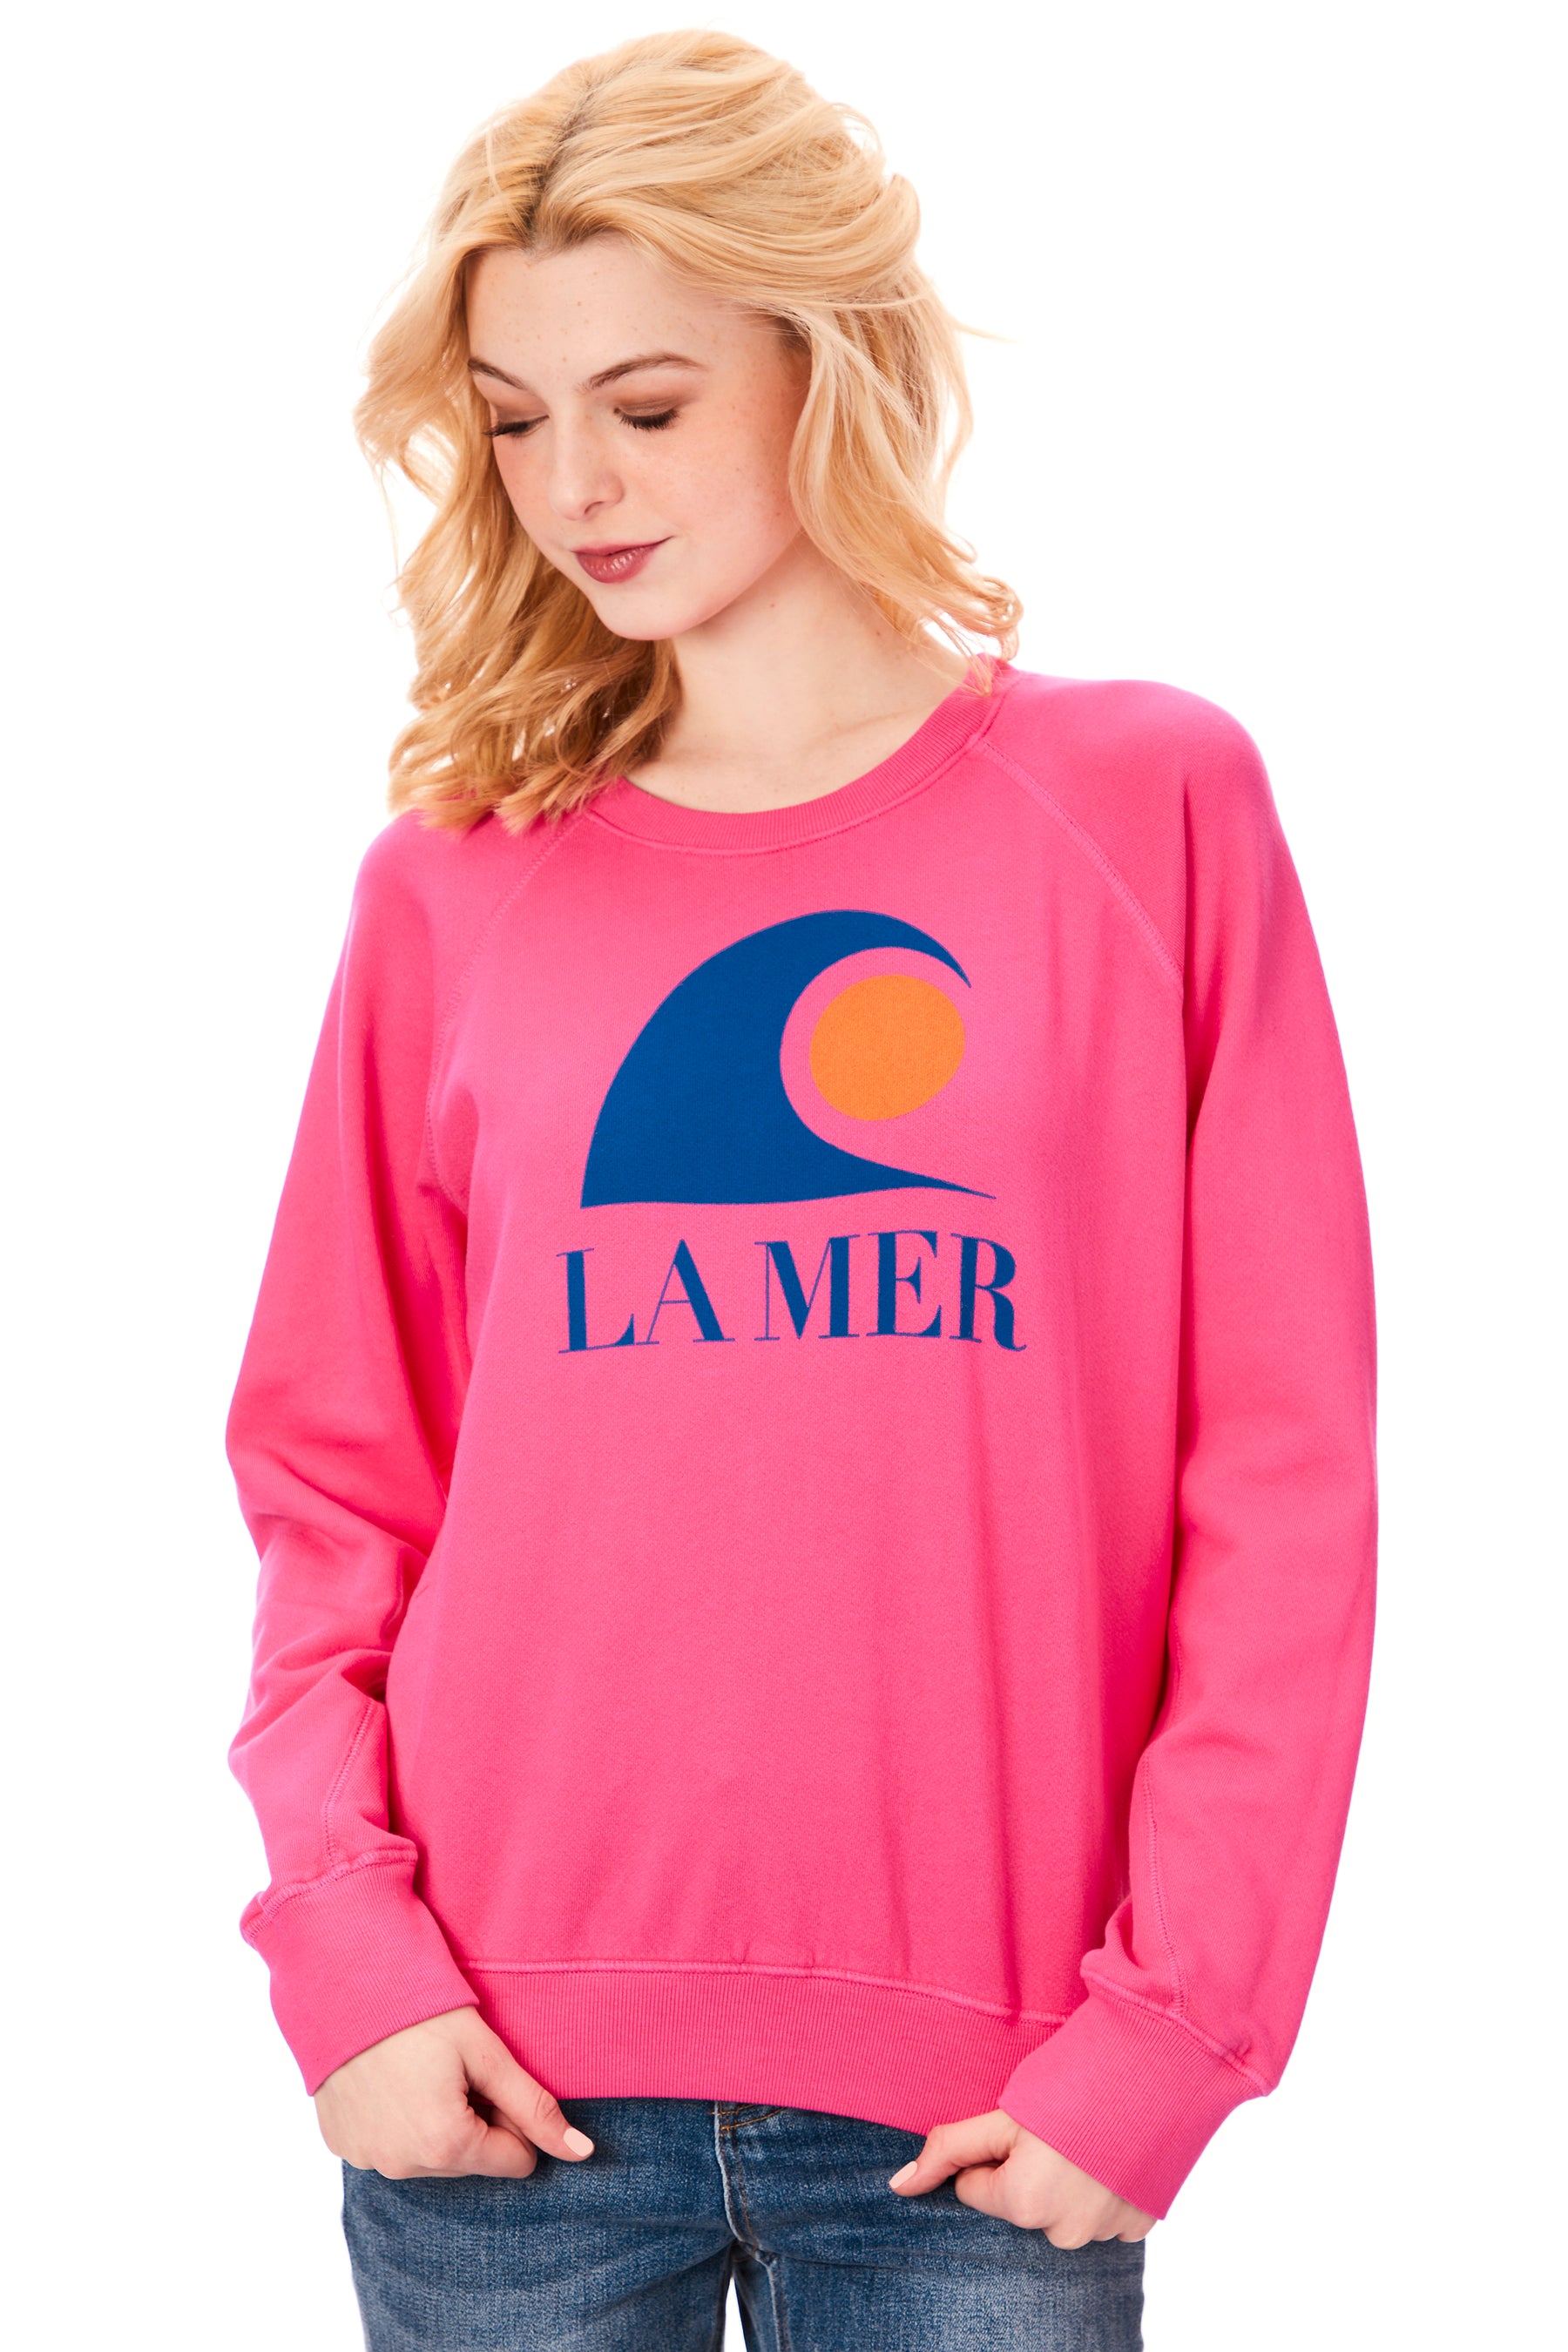 LaMer Sweatshirt